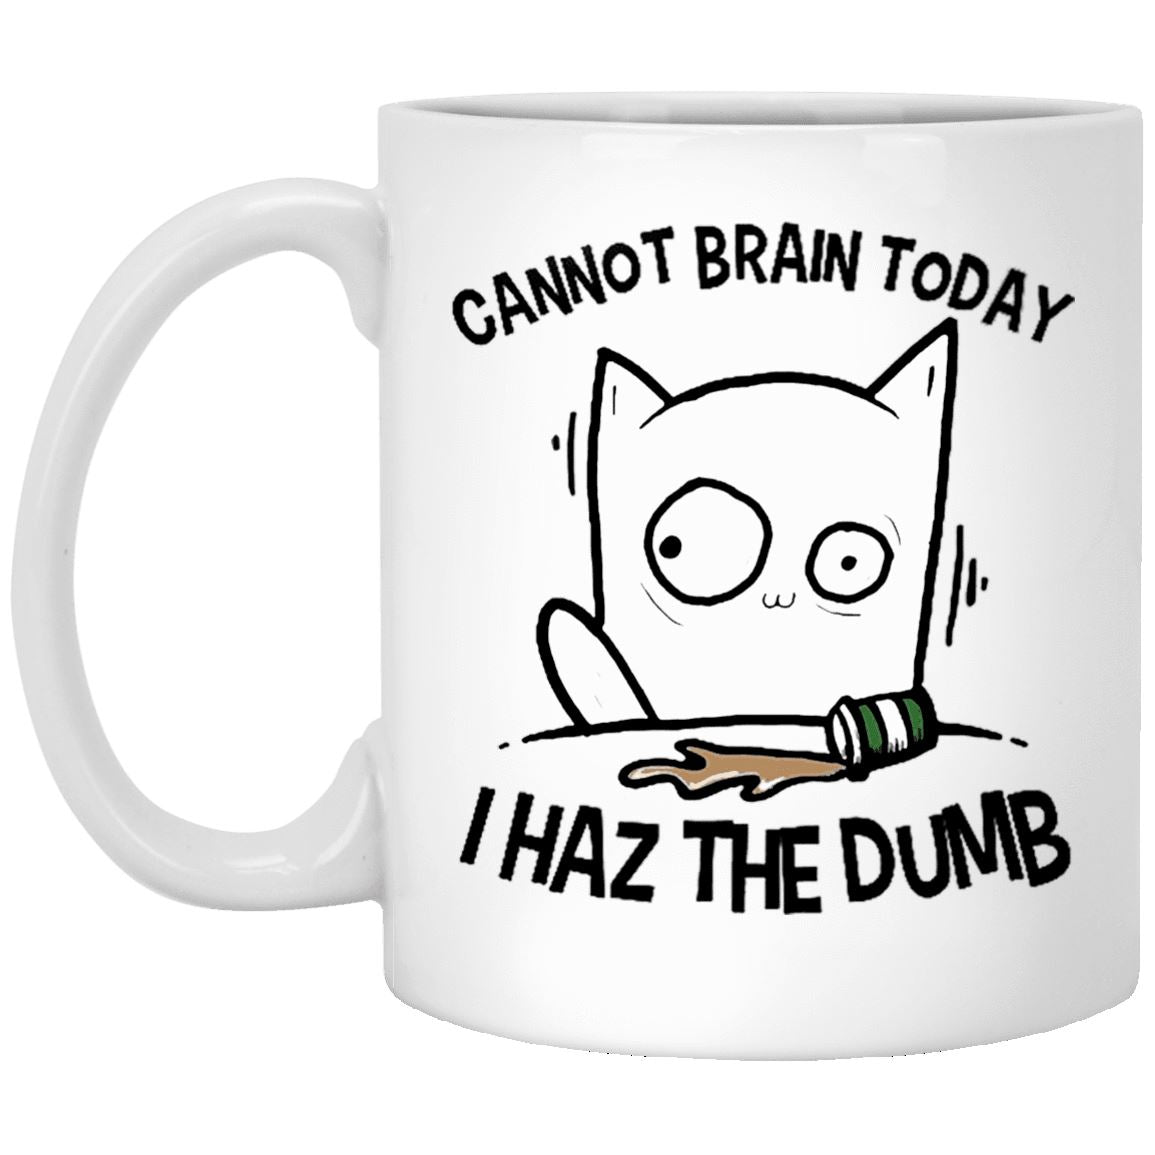 Cat Mug - Cannot Brain Today - CatsForLife